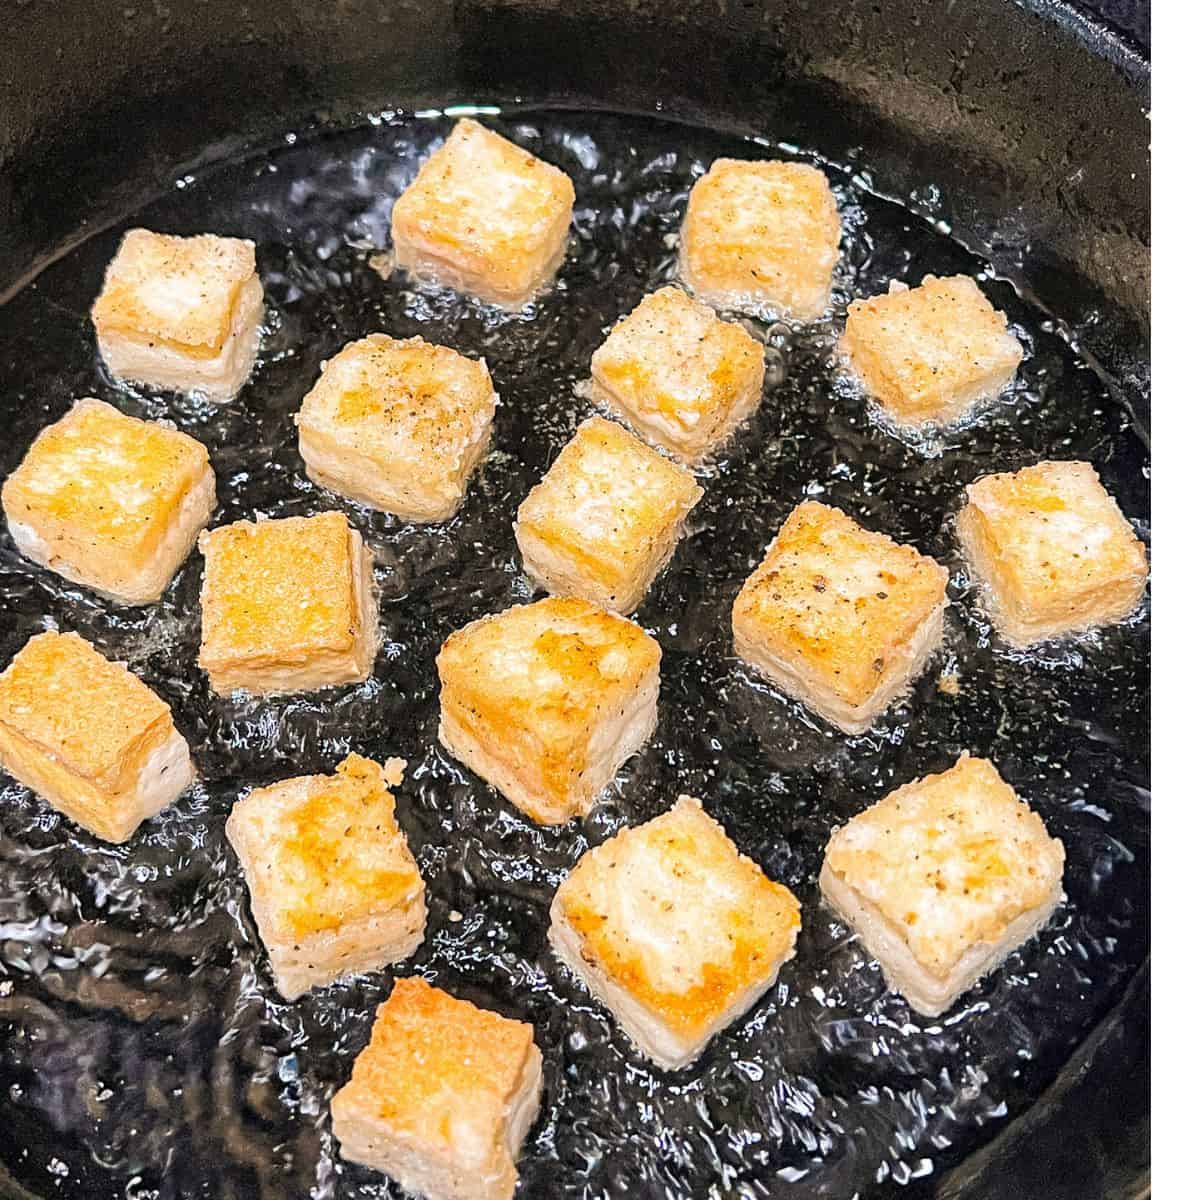 Pan-fried tofu into a skillet.